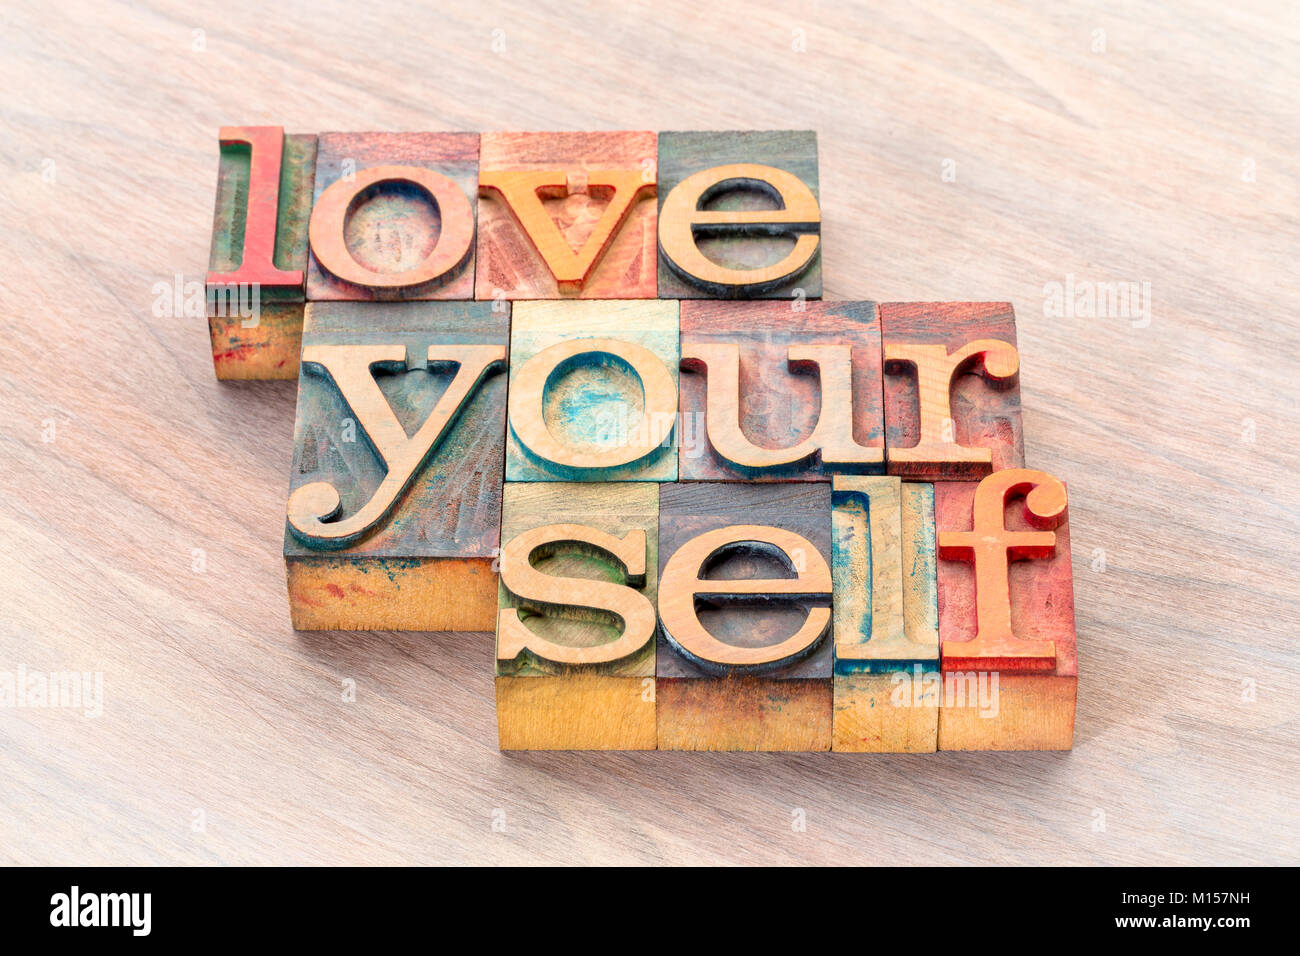 Liebe dich selbst word Abstract in letterprtess Holz Bausteine vom Typ befleckt durch Farbe Tinten Stockfoto